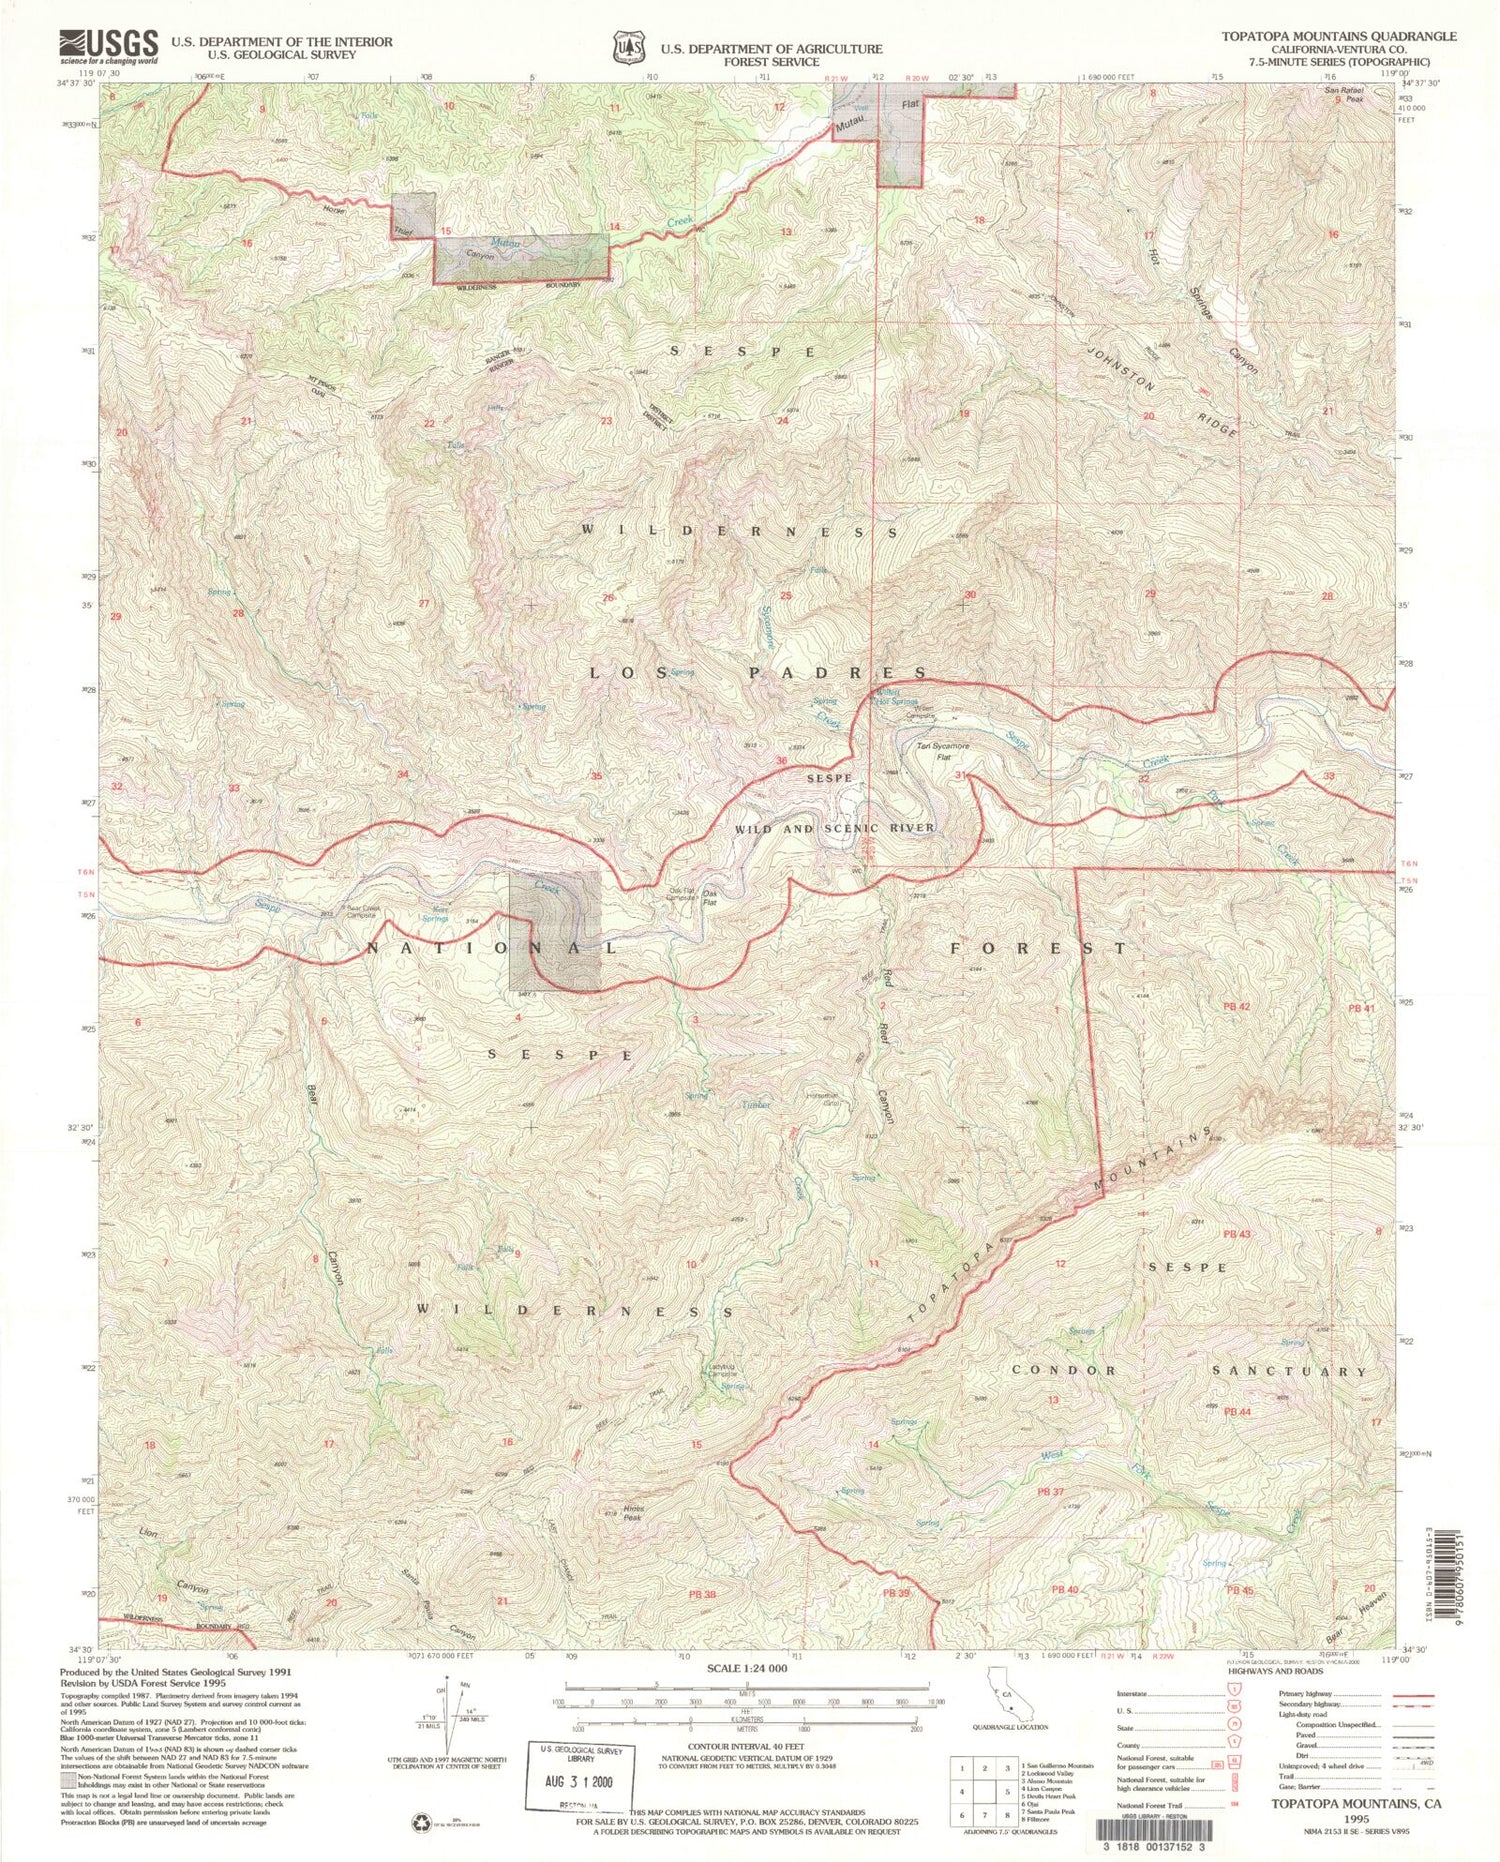 Classic USGS Topatopa Mountains California 7.5'x7.5' Topo Map Image